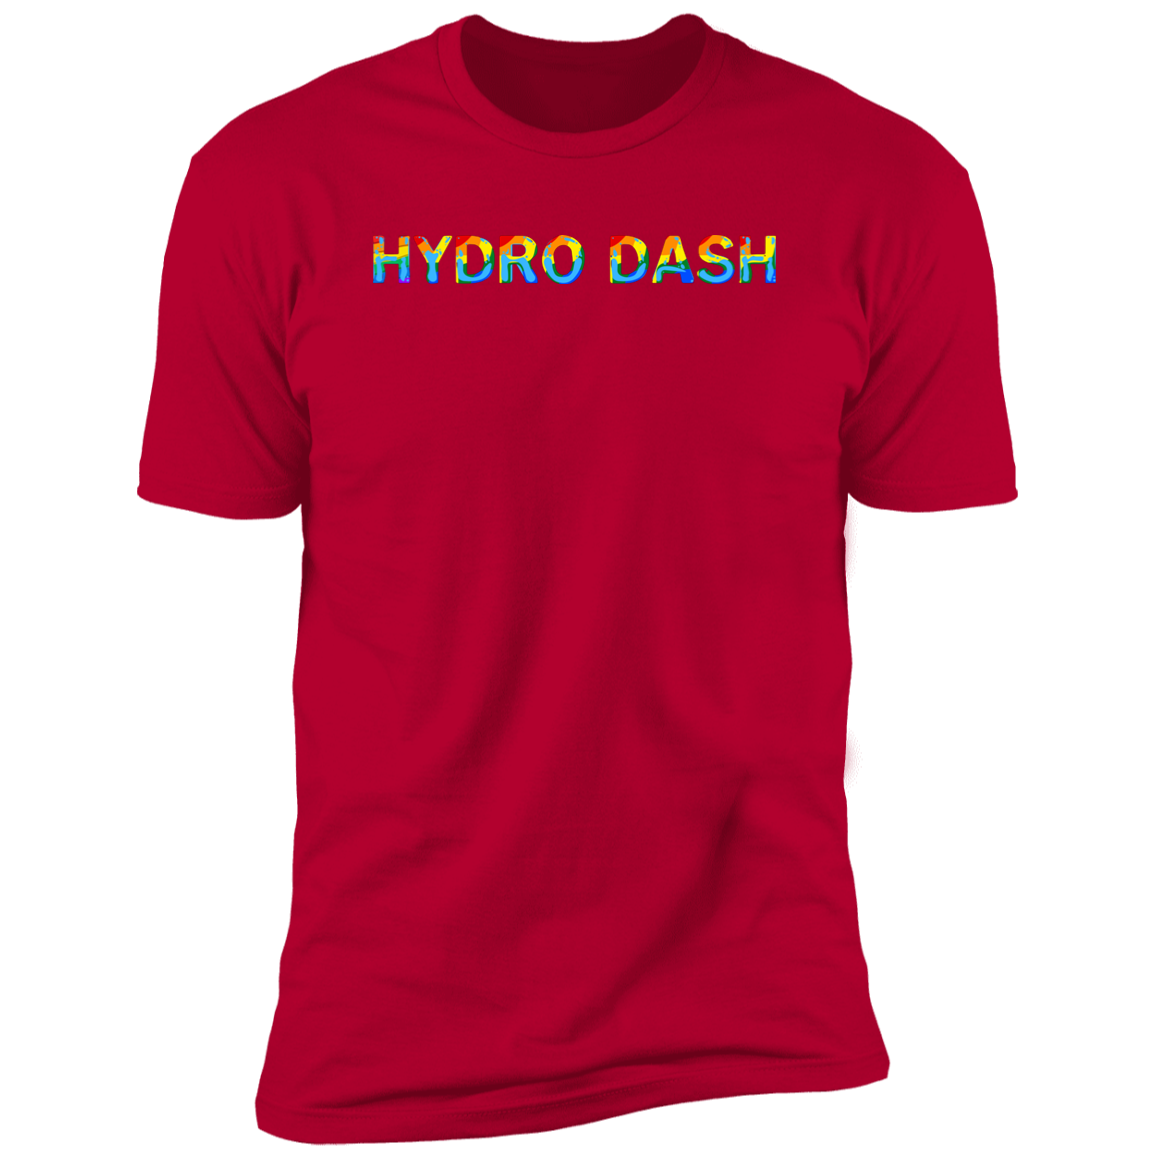  Hydro Dash Pride 2023  t-shirt, dog pride dog Hydro dash shirt for humans, in red